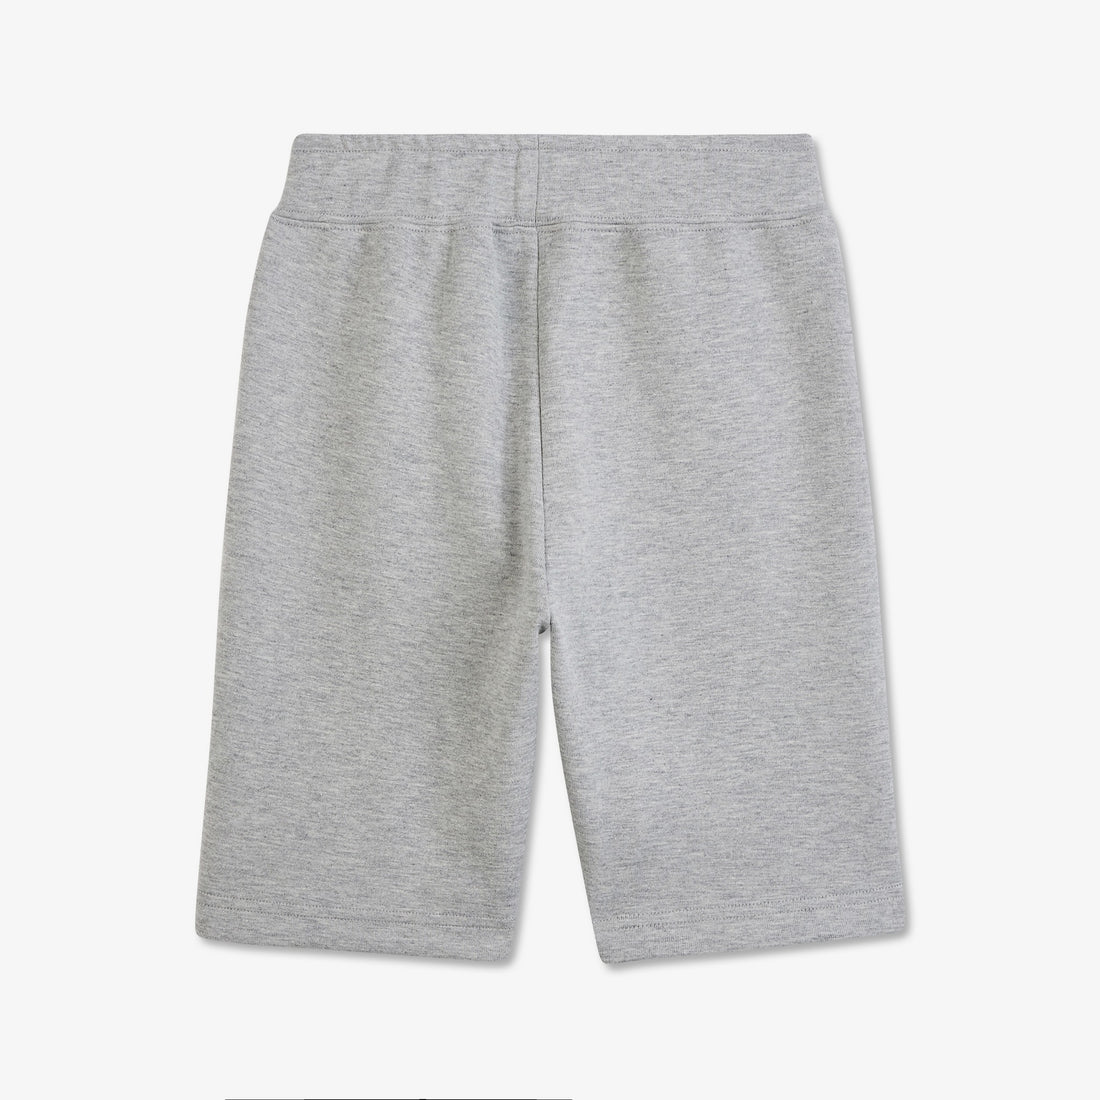 Grey Fleece Shorts - 02